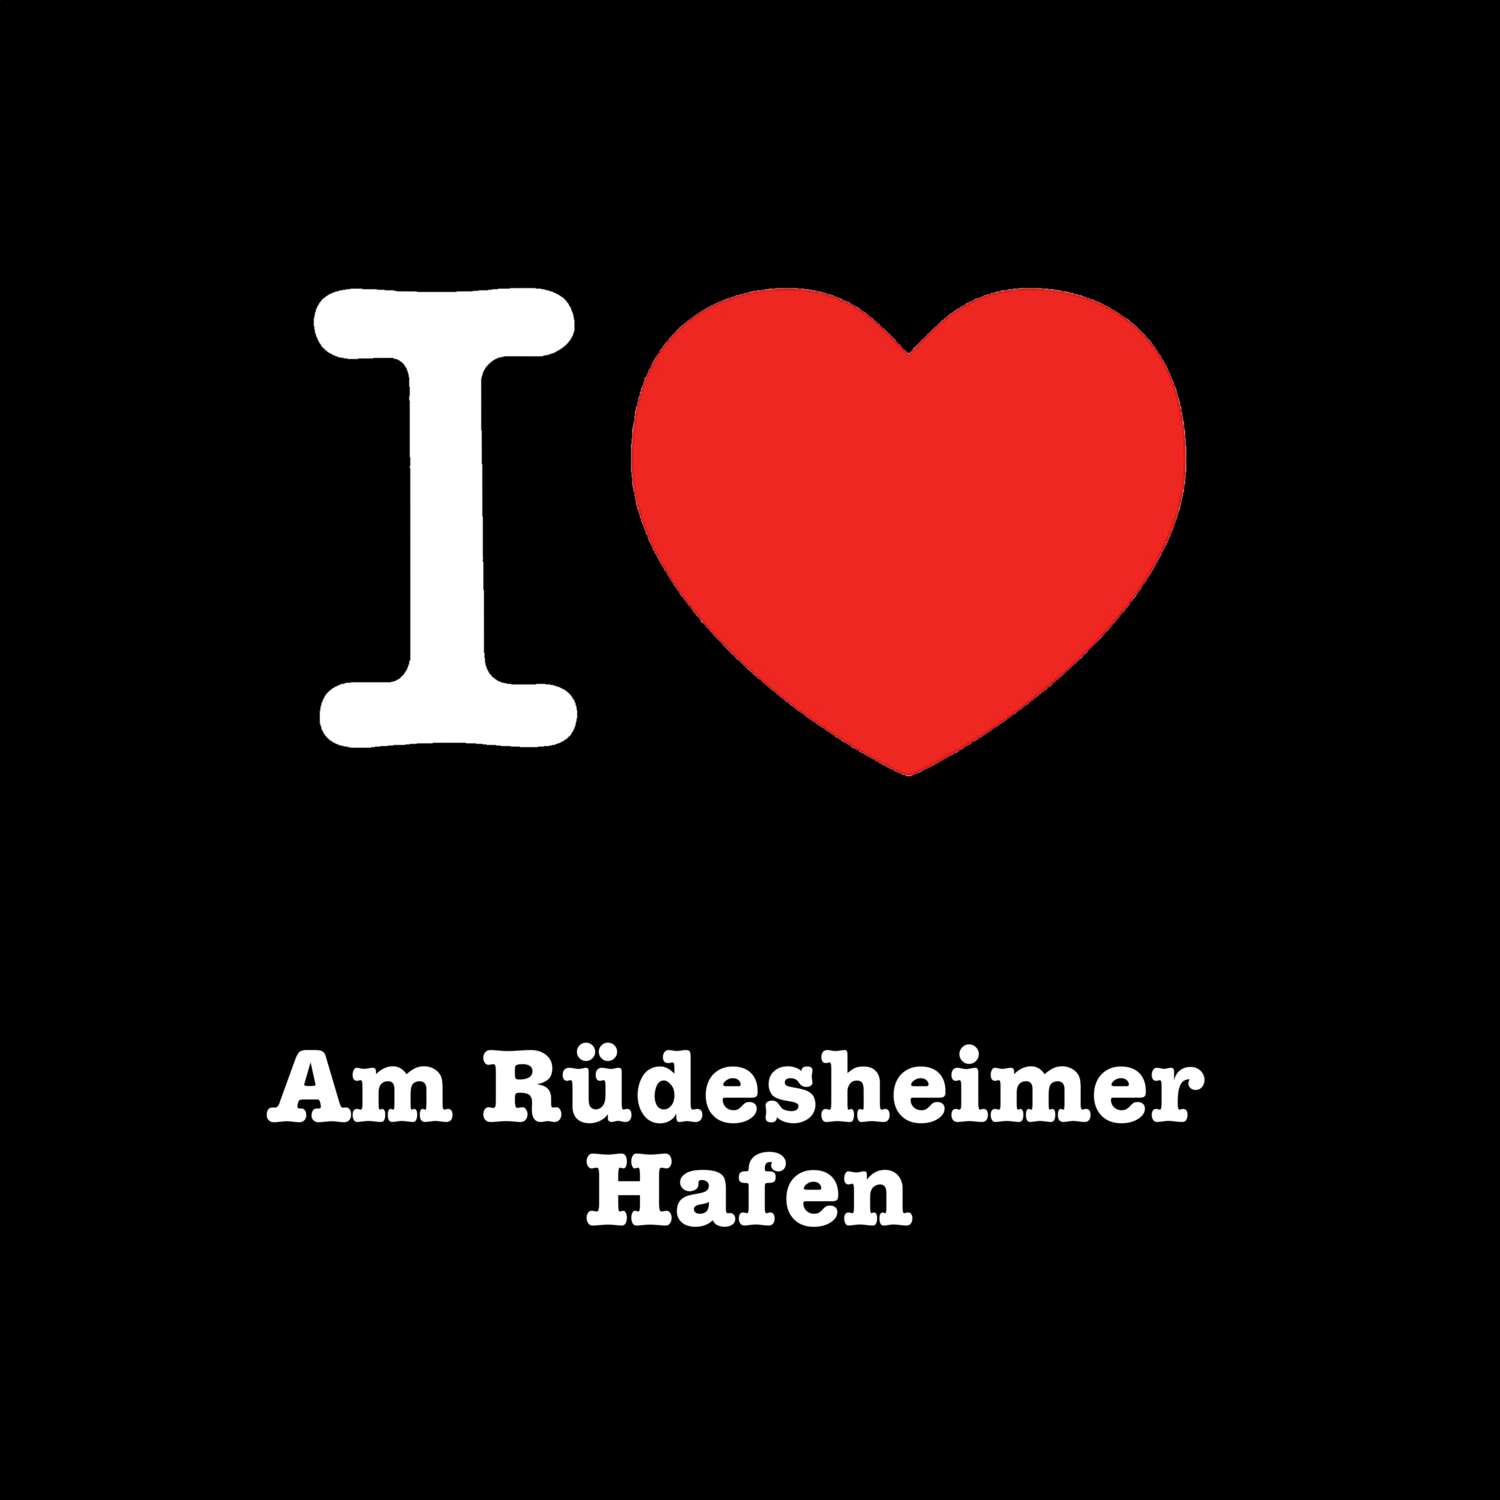 Am Rüdesheimer Hafen T-Shirt »I love«